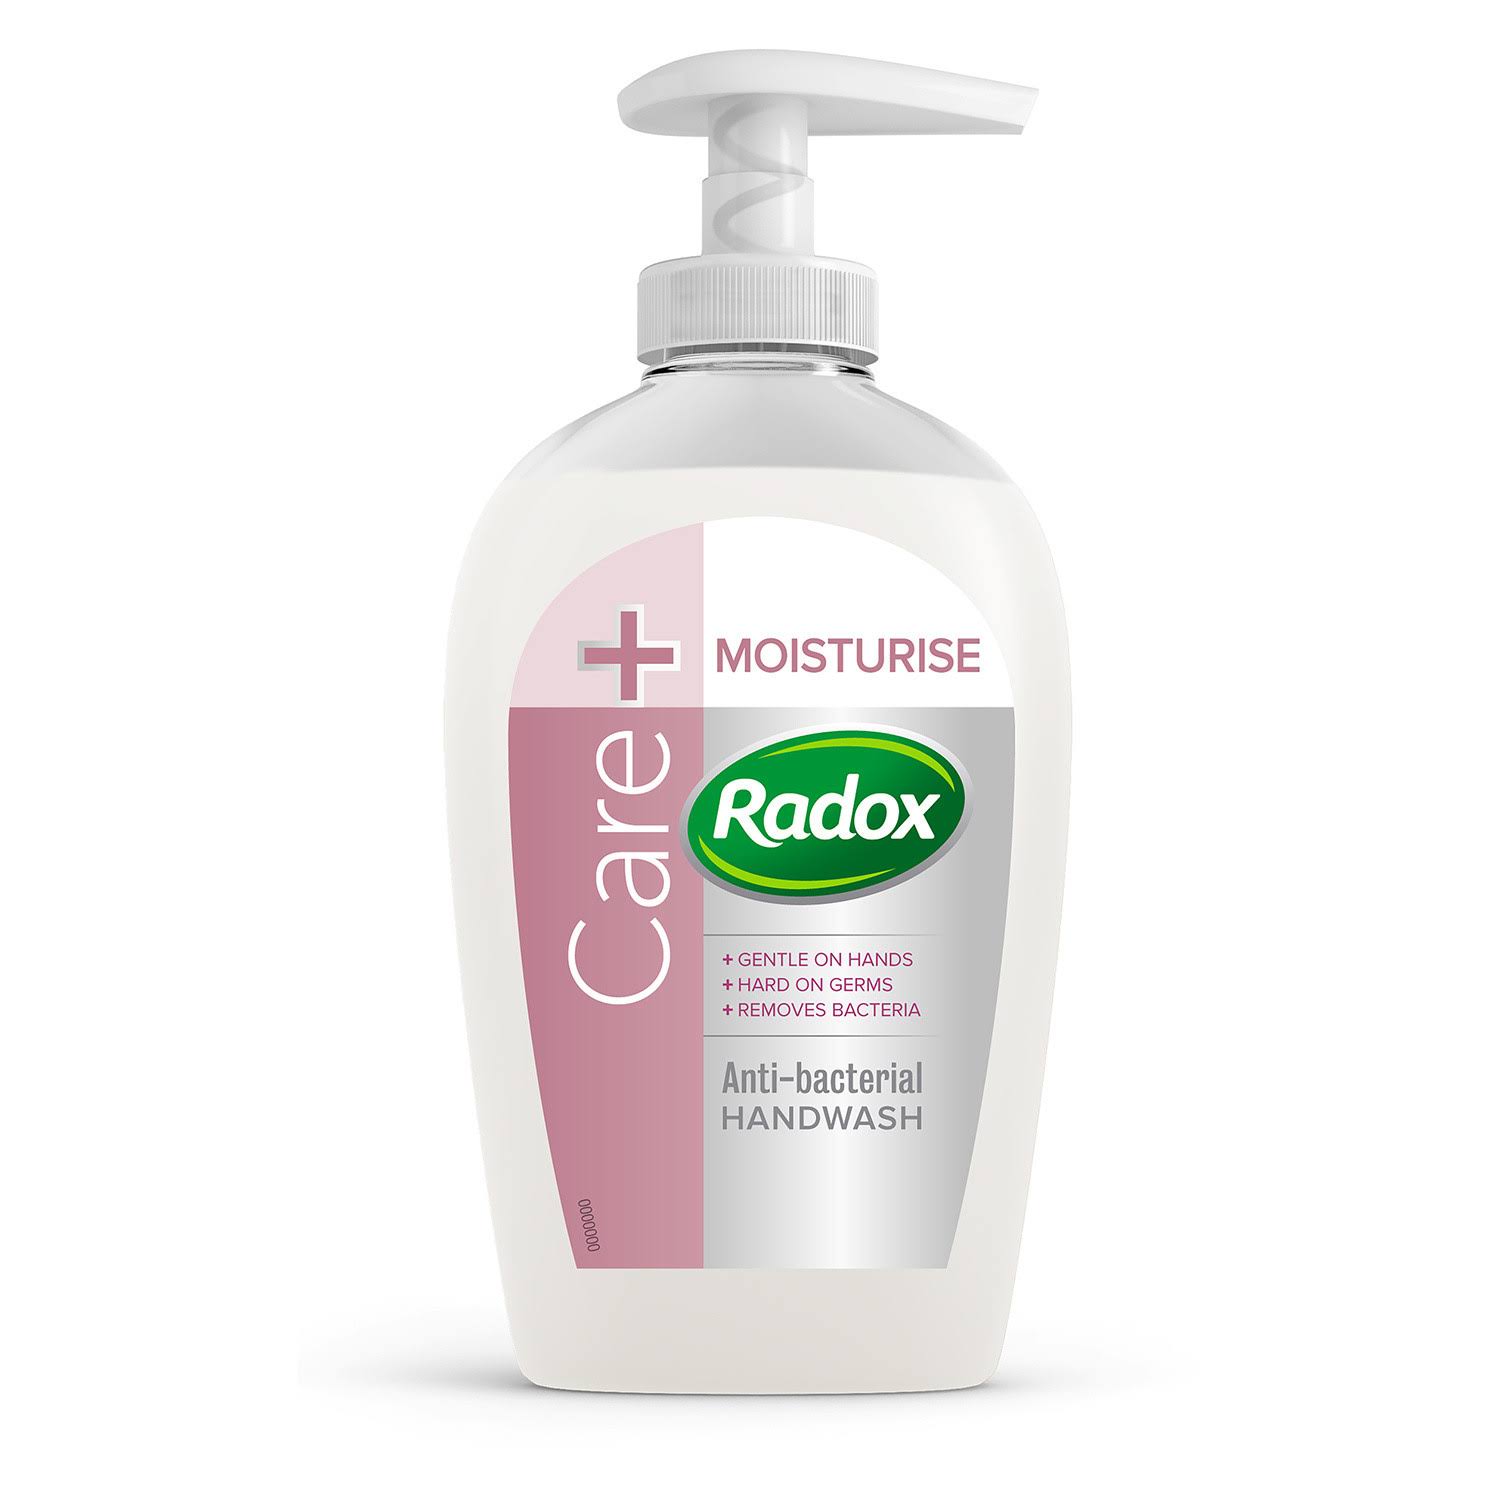 Radox Care + Moisturise Antibacterial Handwash - 250ml